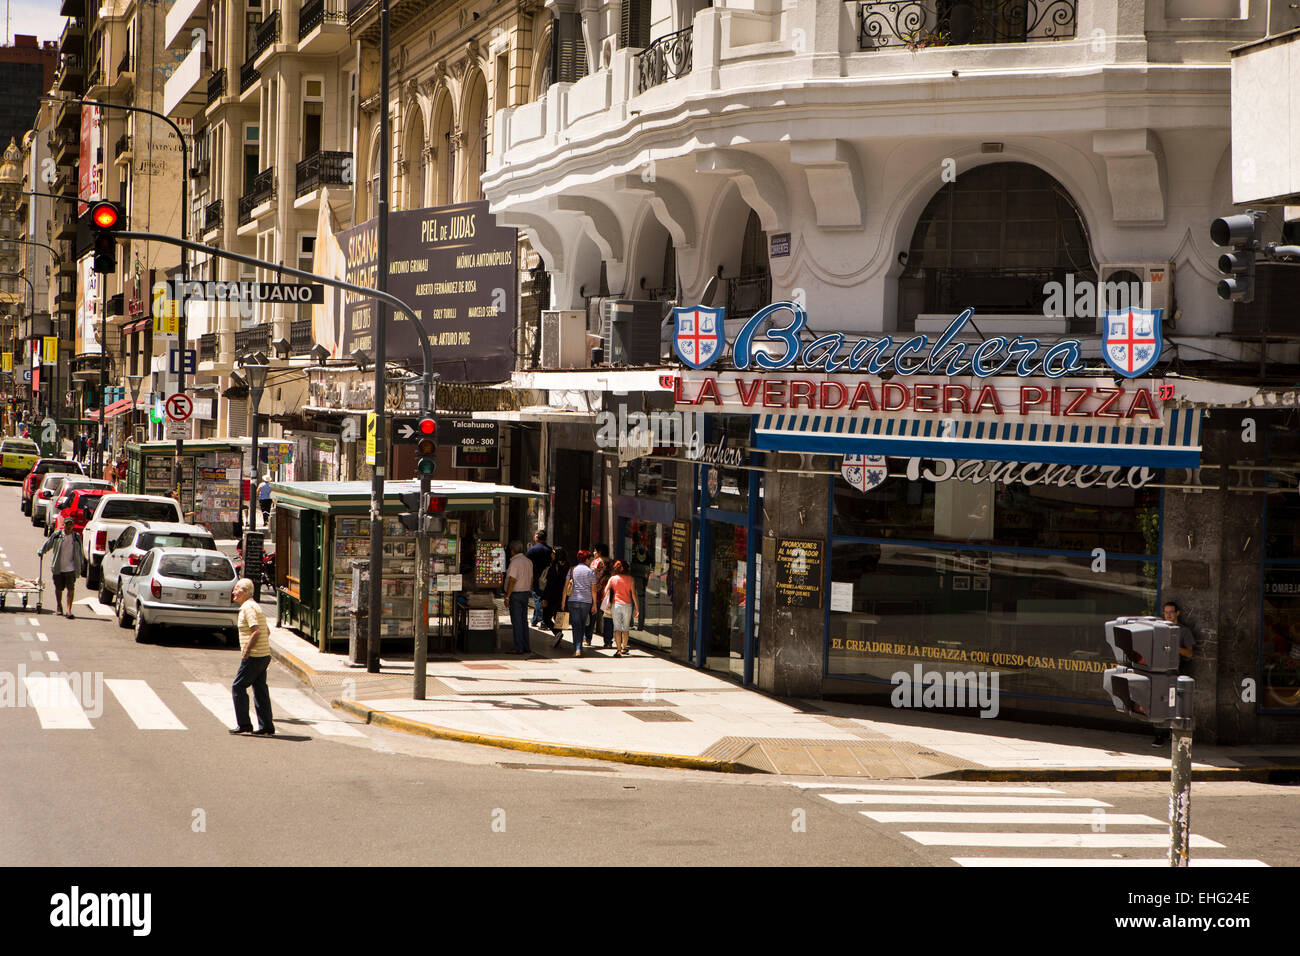 Argentina, Buenos Aires, Talcahuano, Banchero, Le Verdadera street corner pizza restuarant Stock Photo